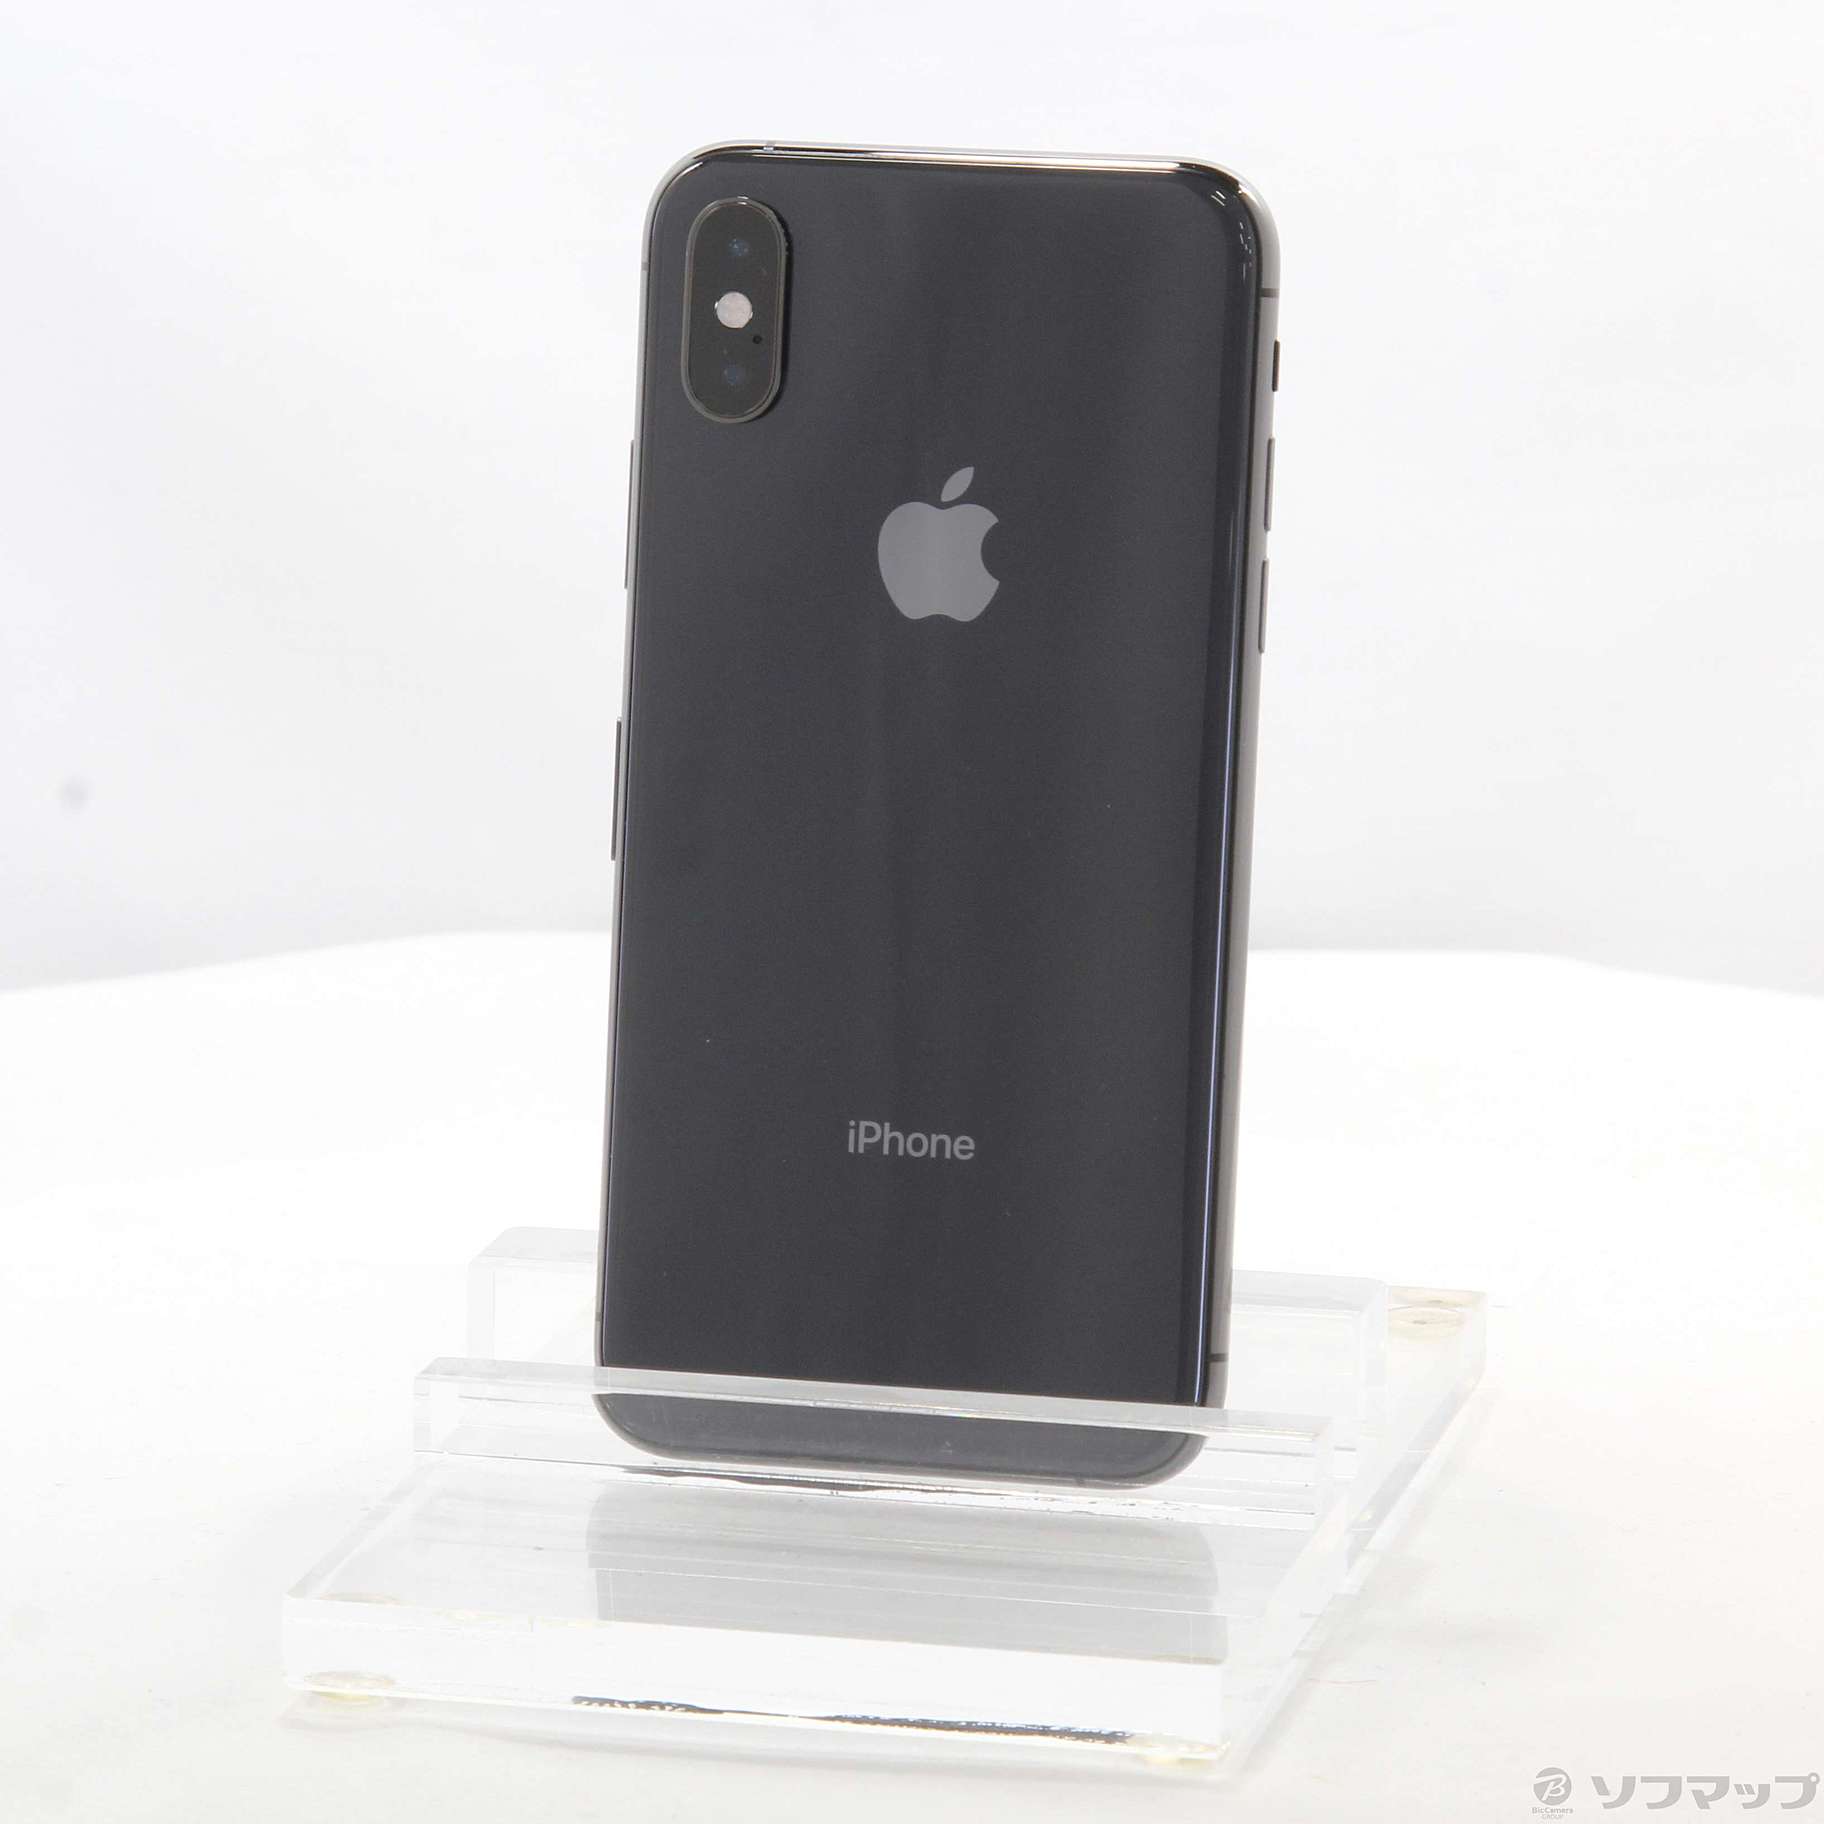 iPhone XS 256GB space gray アイフォン Apple